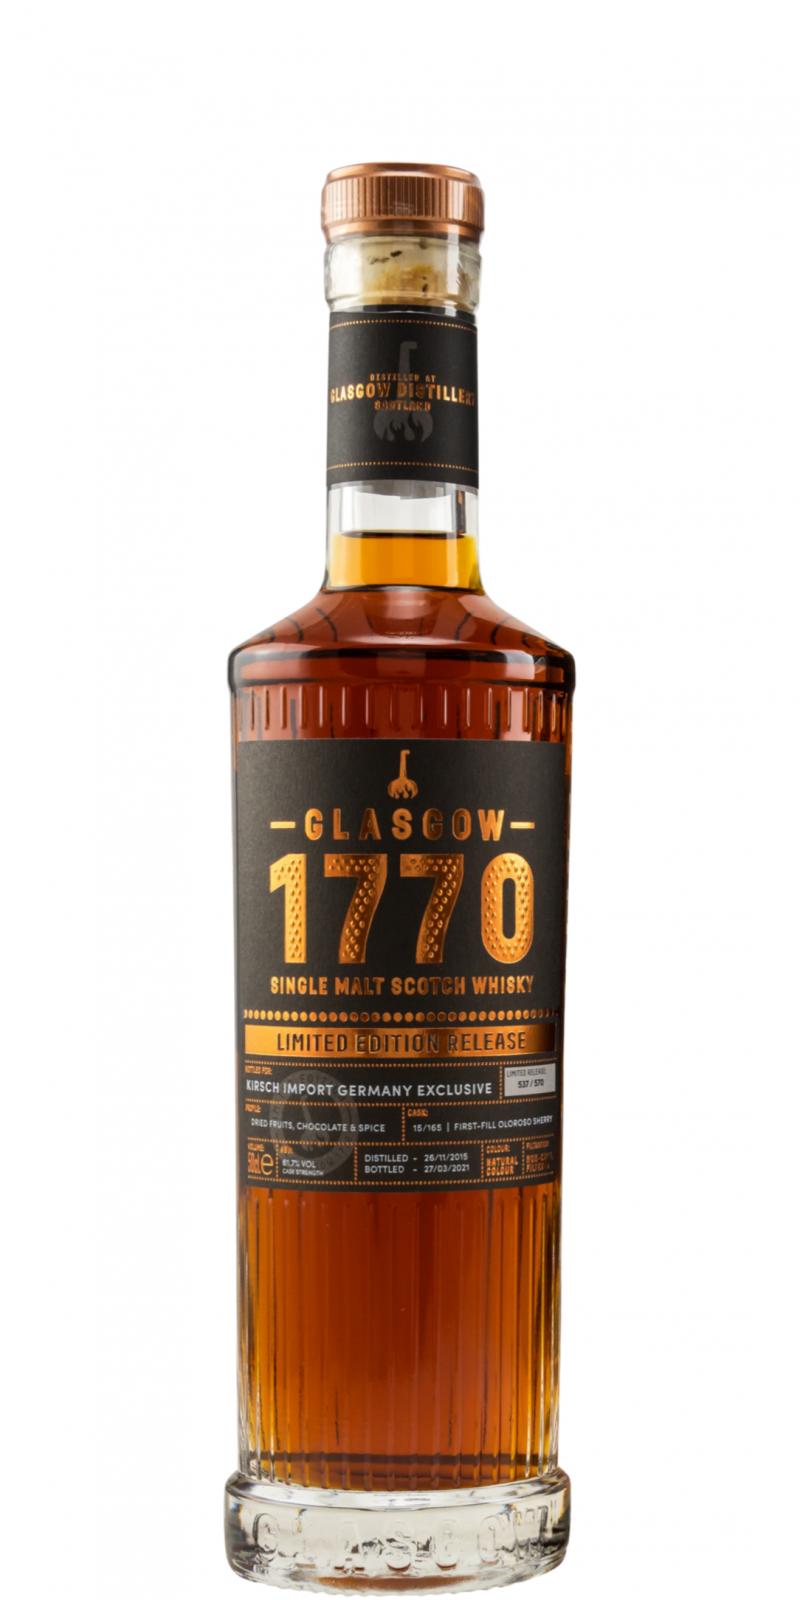 1770 2015 - Glasgow Single Malt